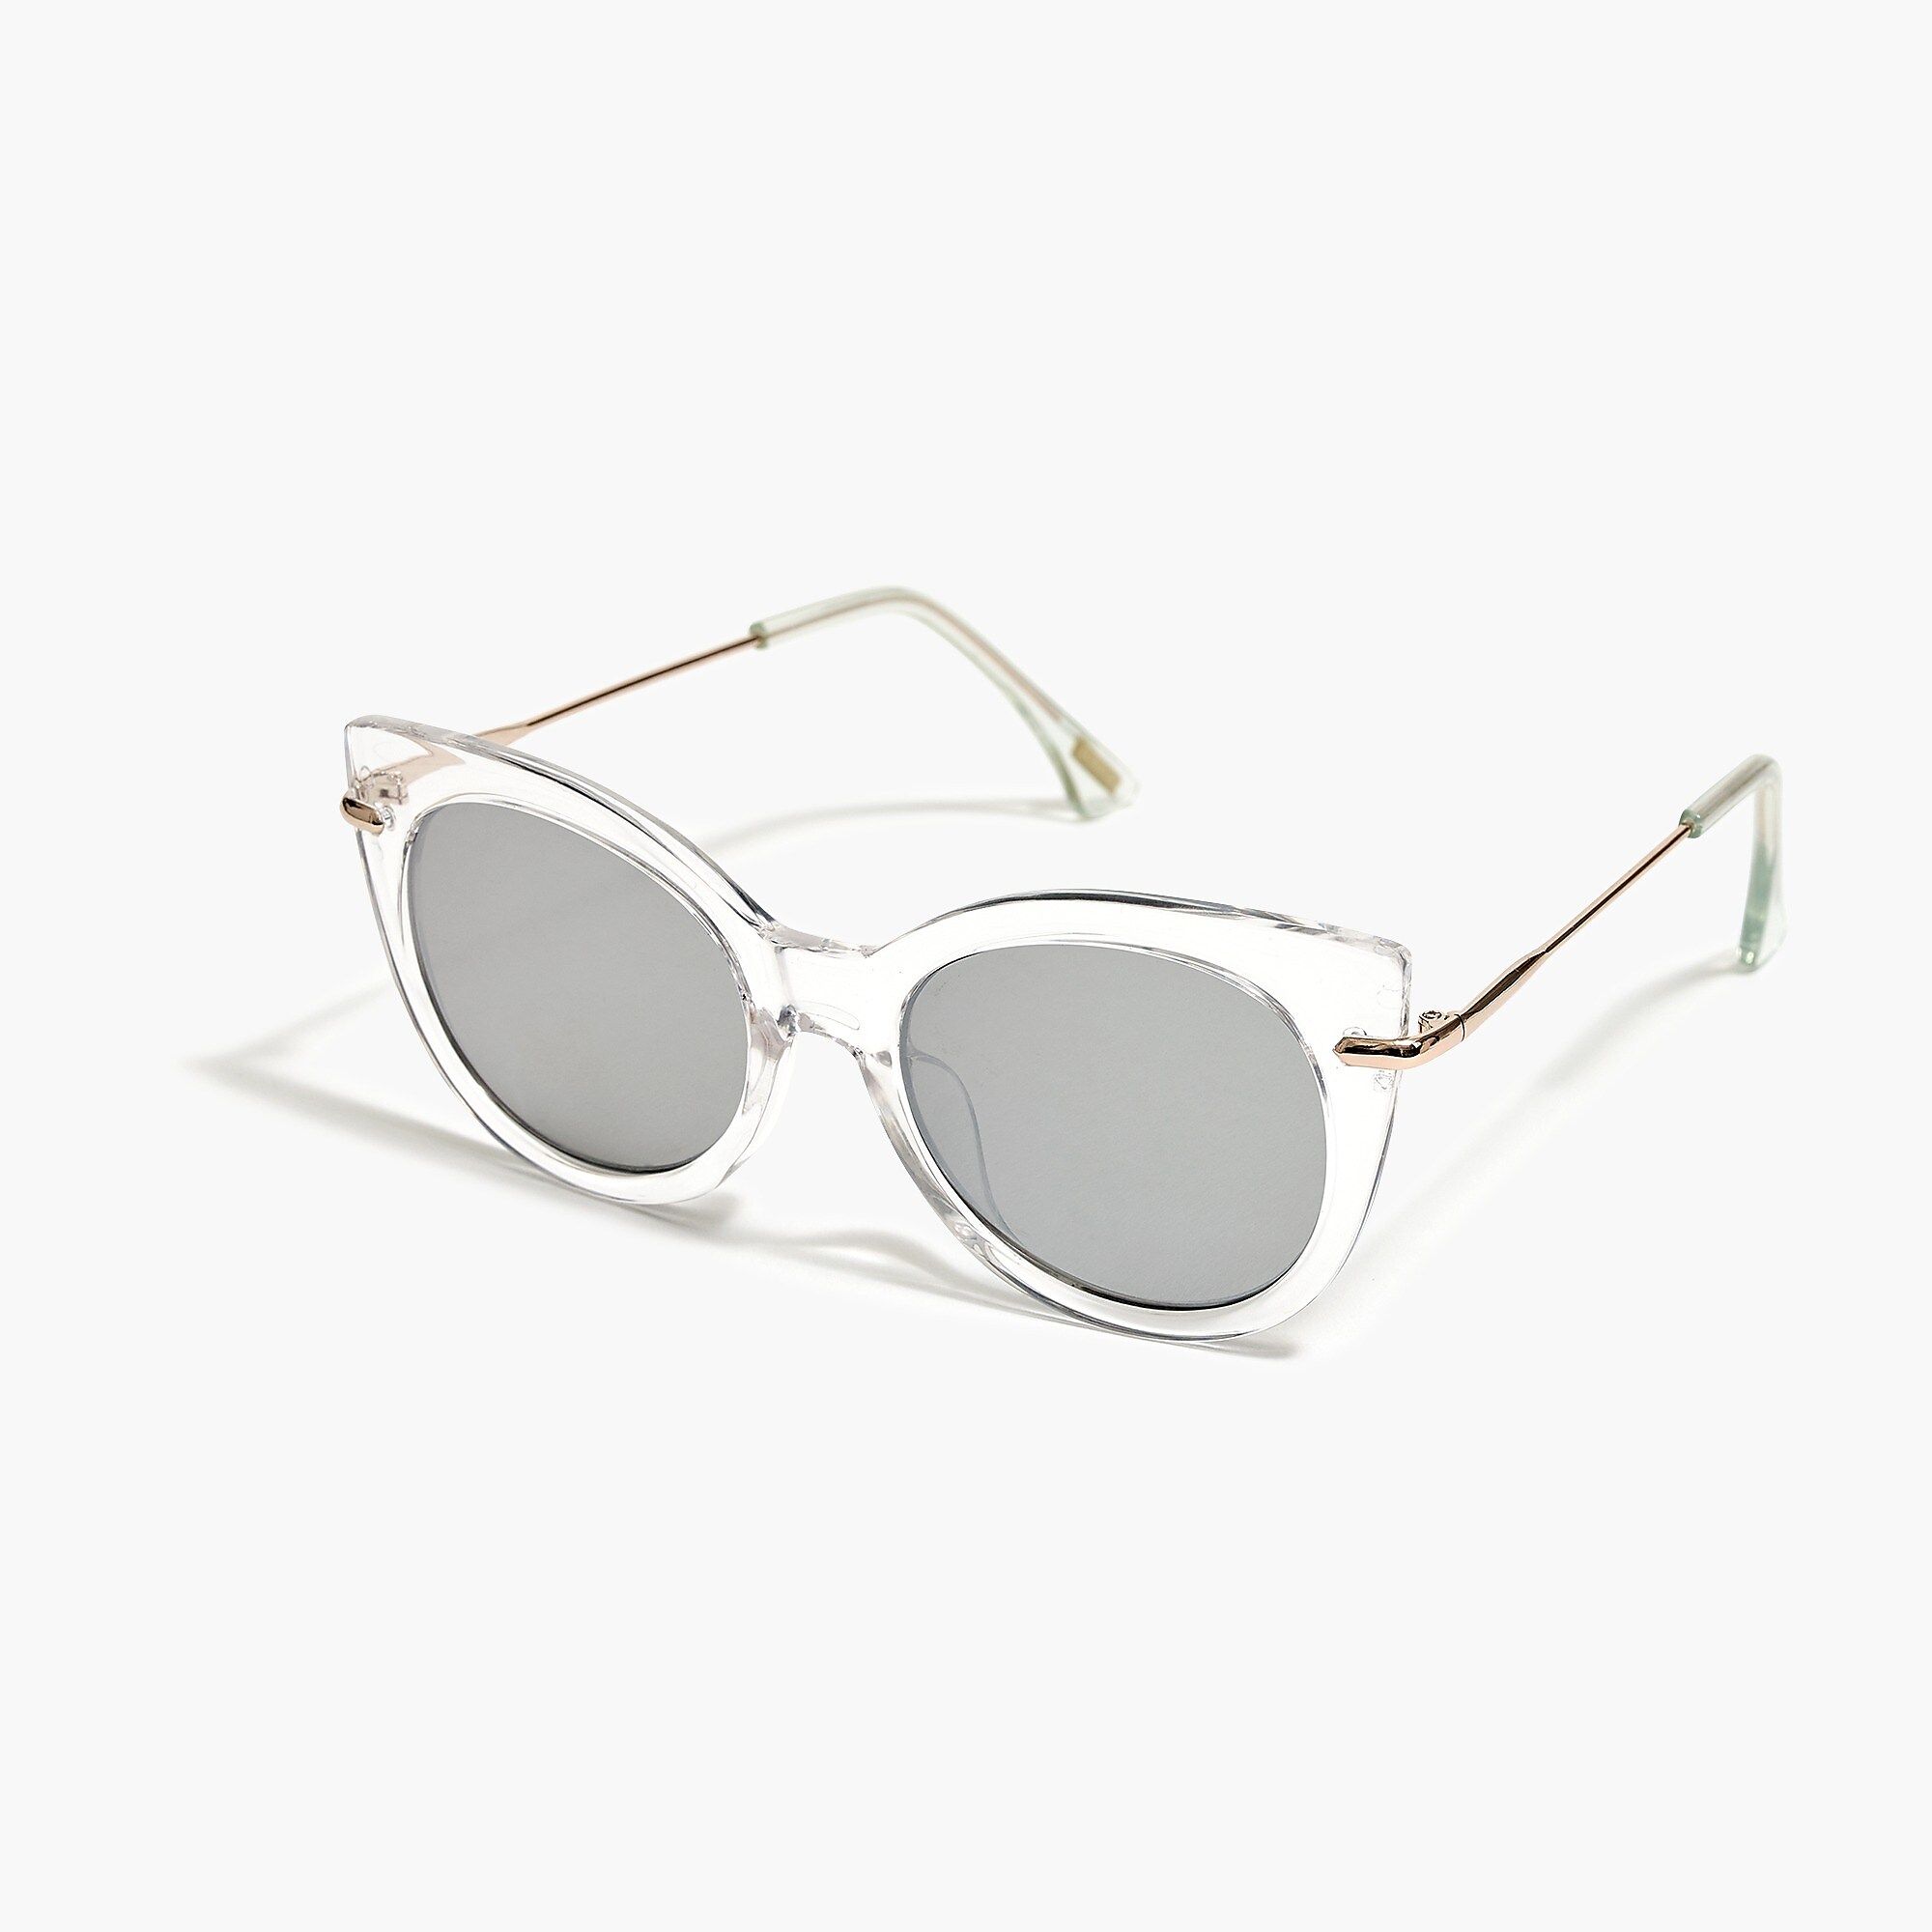 Poolside sunglasses | J.Crew Factory